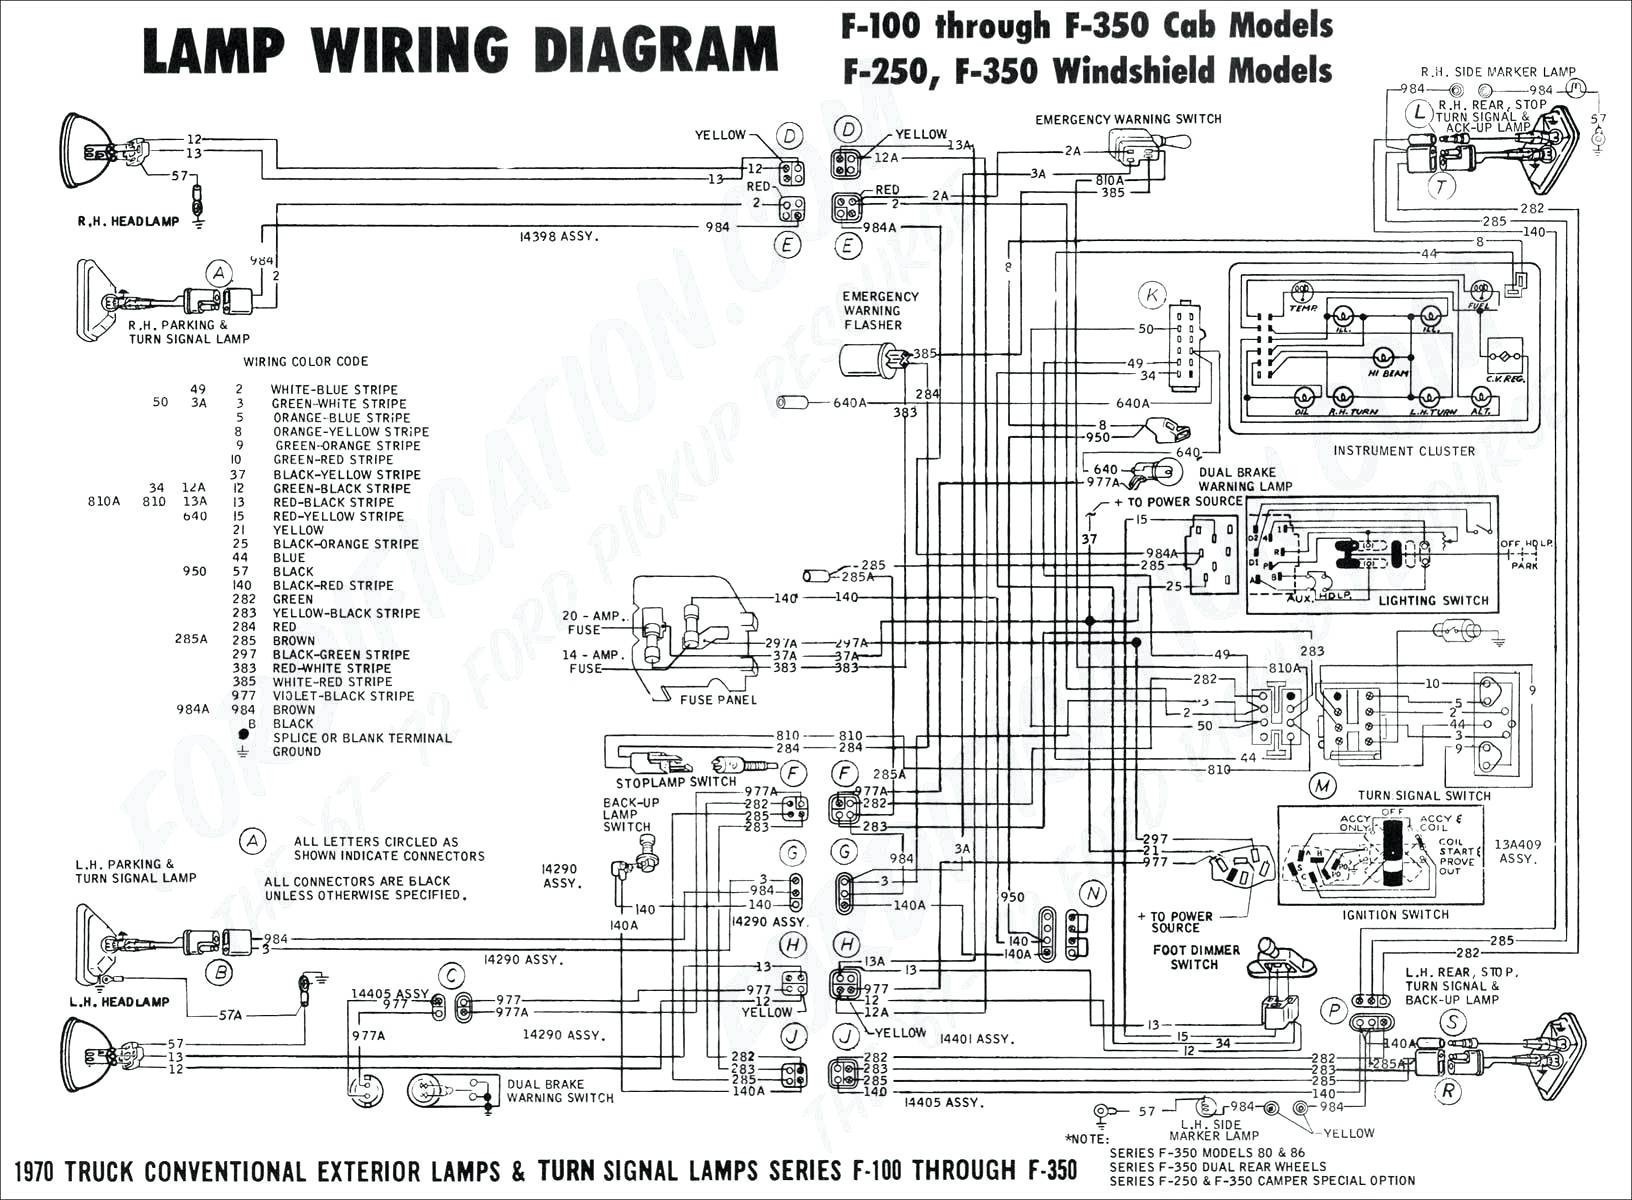 Car Lift Wiring Diagram Elevator Wiring Diagram Symbols Fresh Kohler 72 Deck Hyd Lift Sn Of Car Lift Wiring Diagram